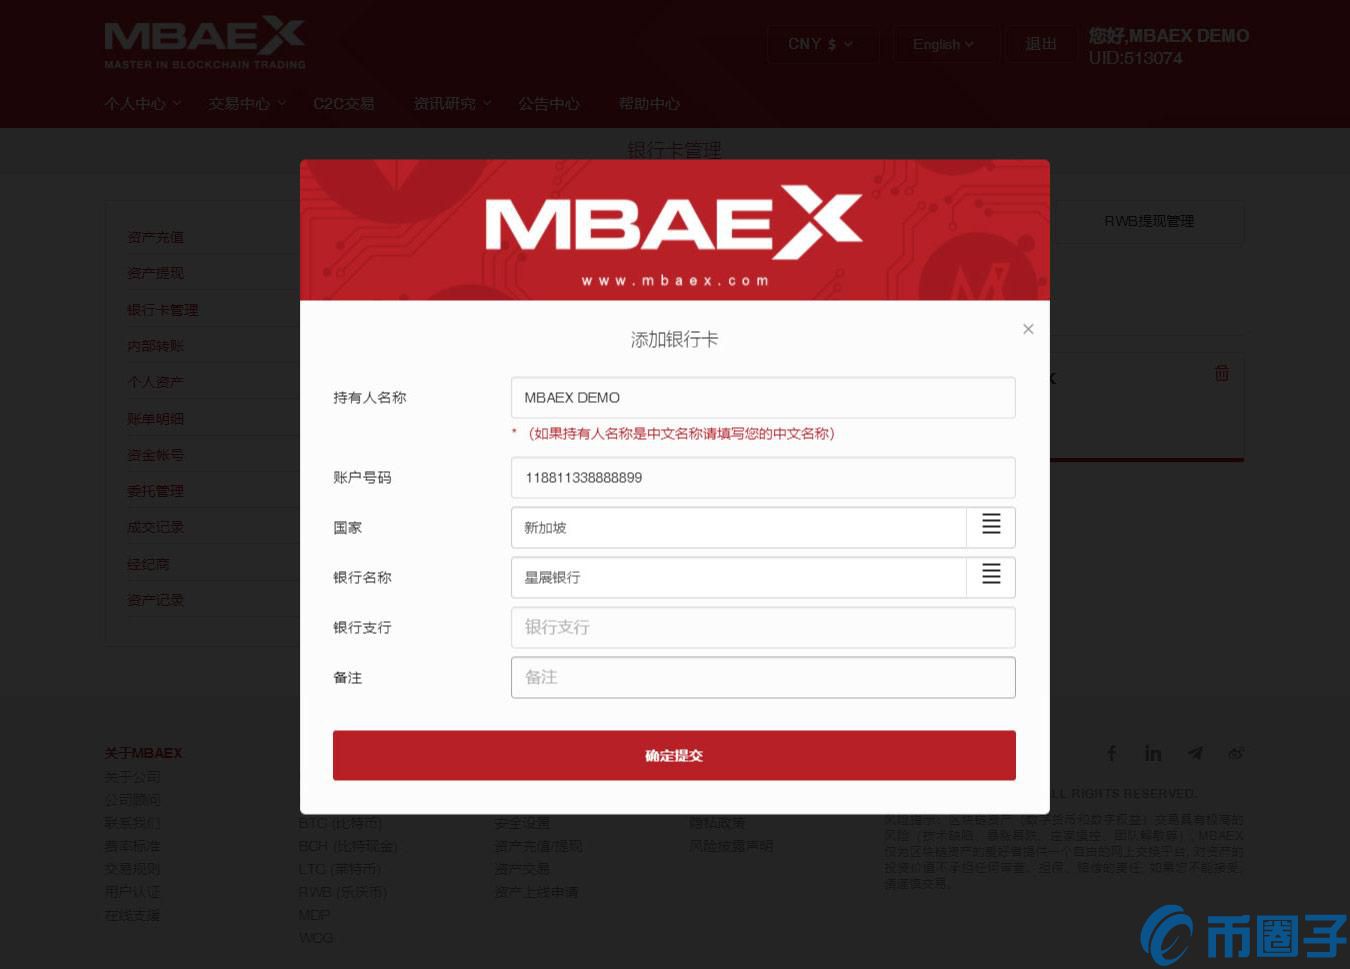 MBAex交易平台C2C交易具体流程！